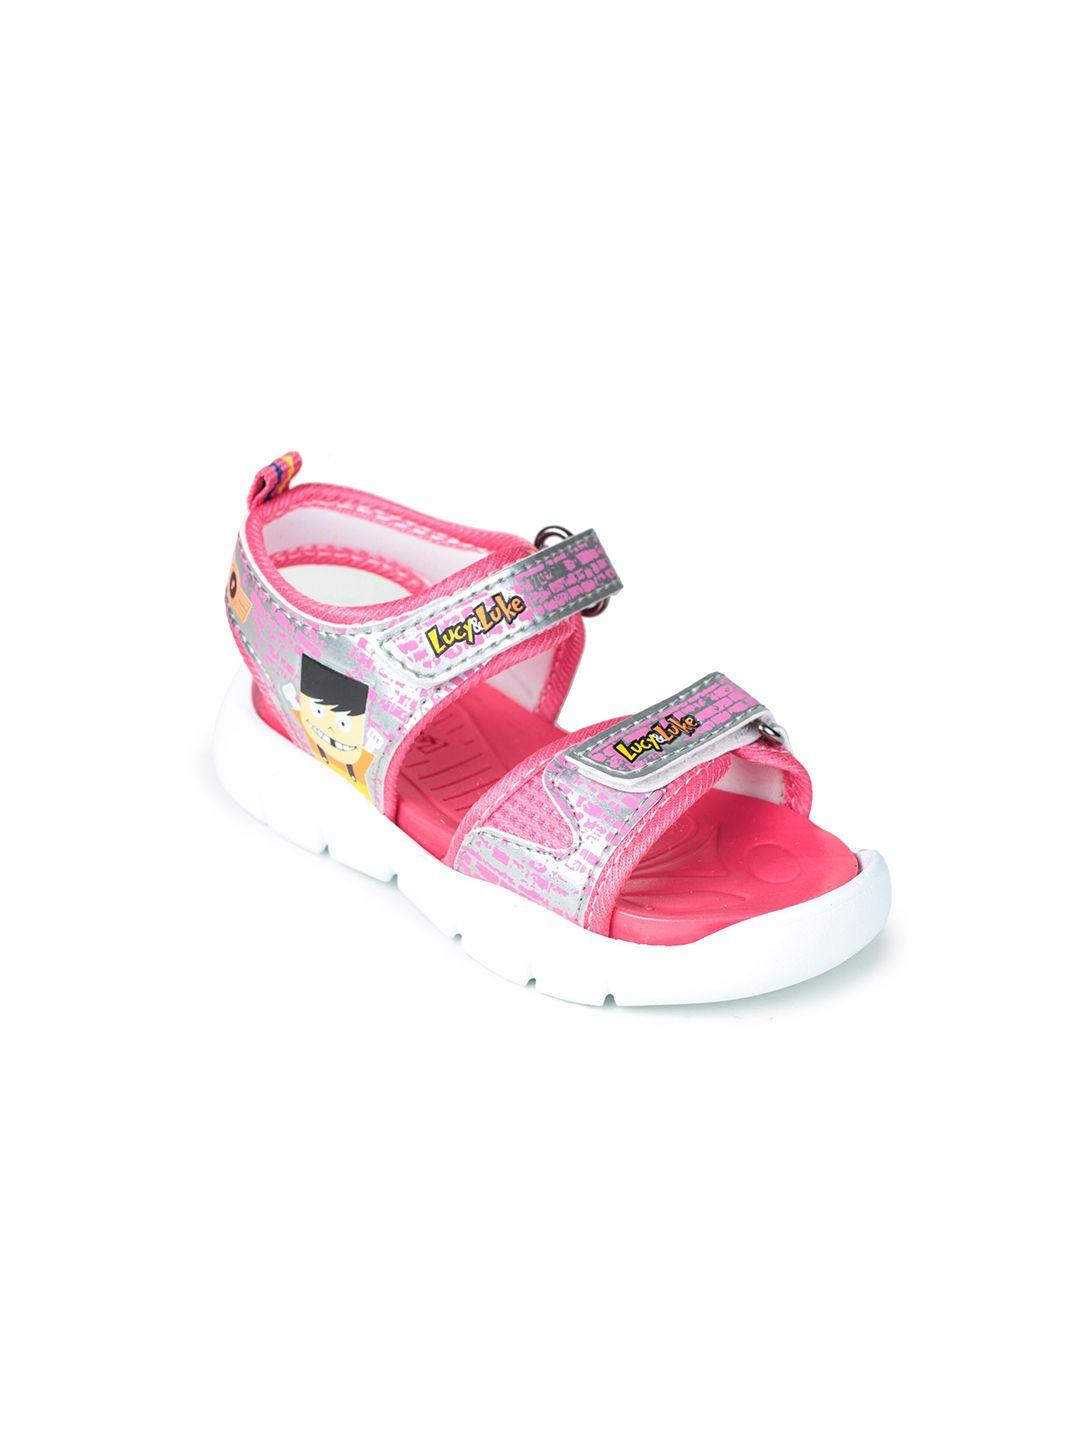 liberty-kids-pink-printed-sports-sandal